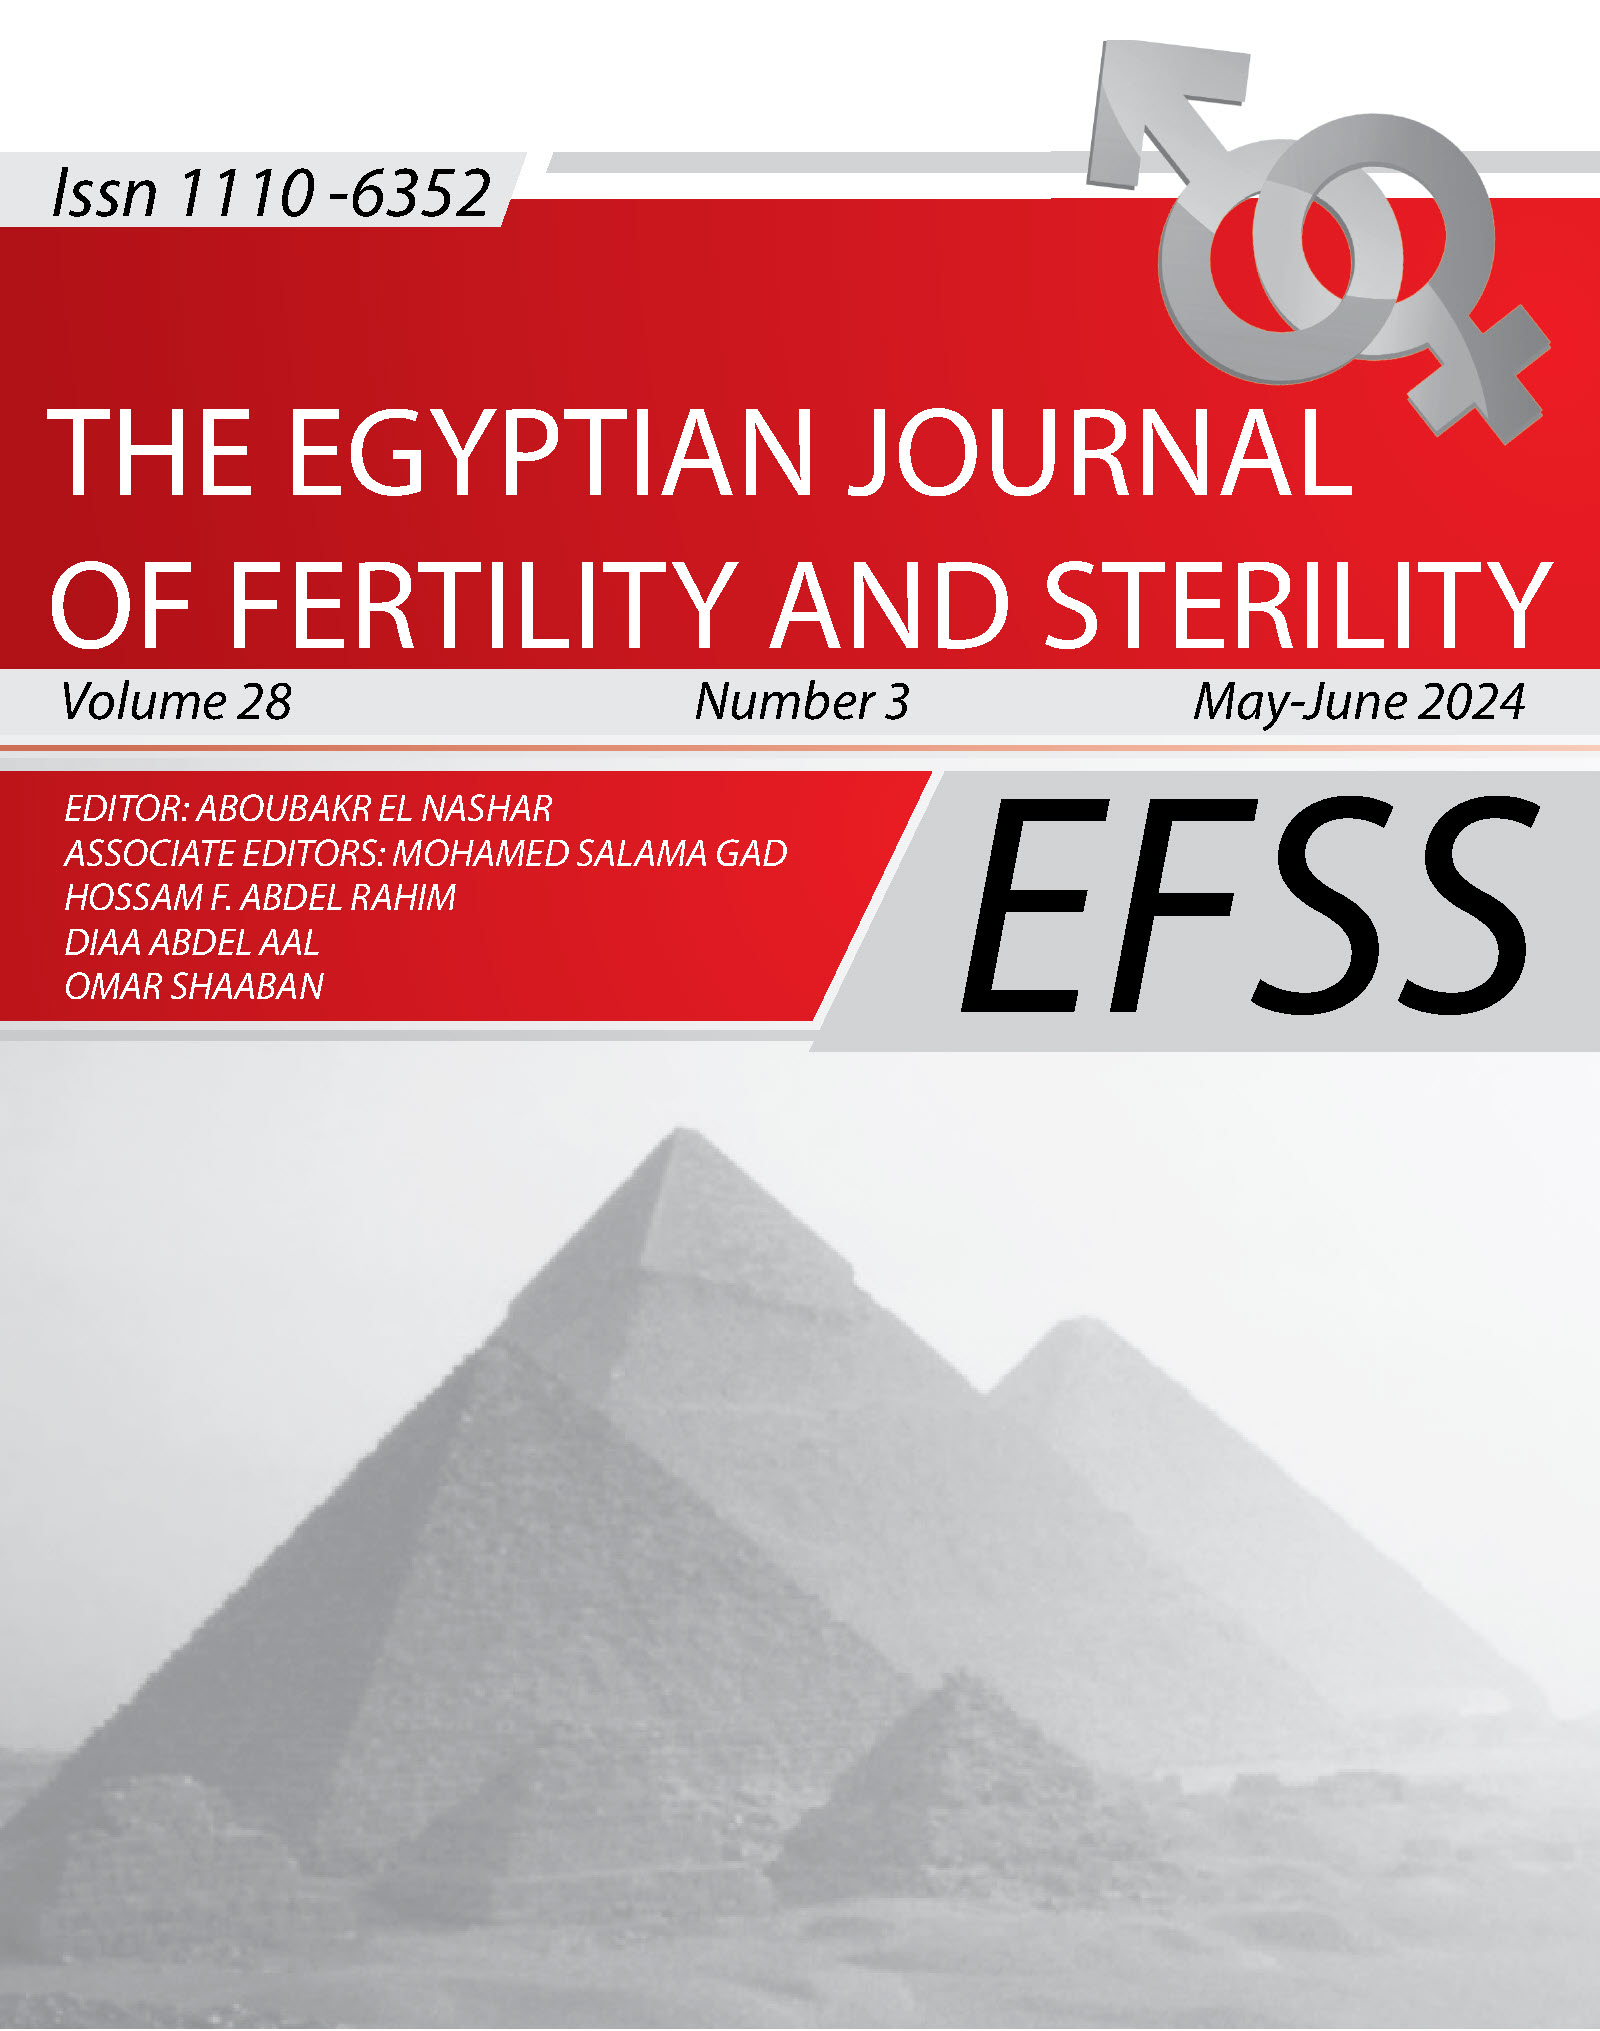 The Egyptian Journal of Fertility of Sterility